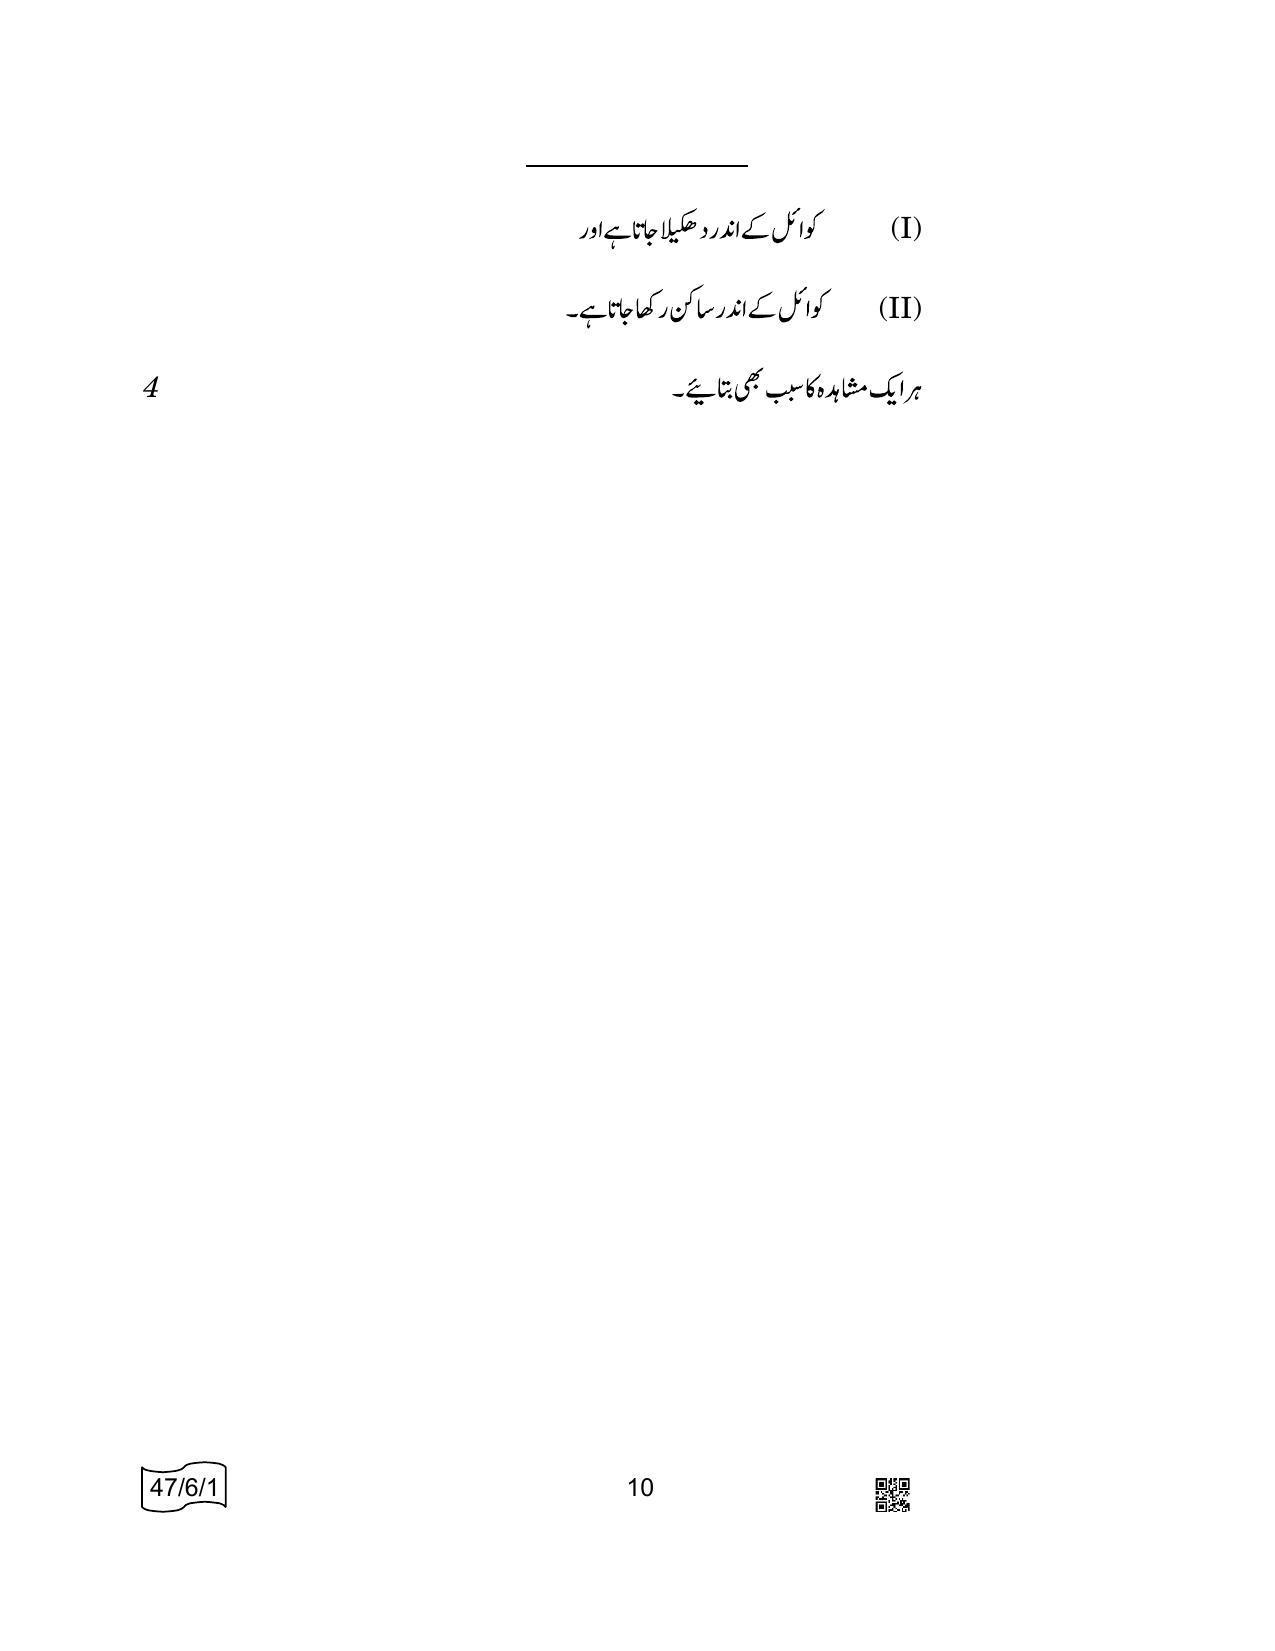 CBSE Class 10 47-6-1 SCIENCE Urdu 2022 Compartment Question Paper - Page 10